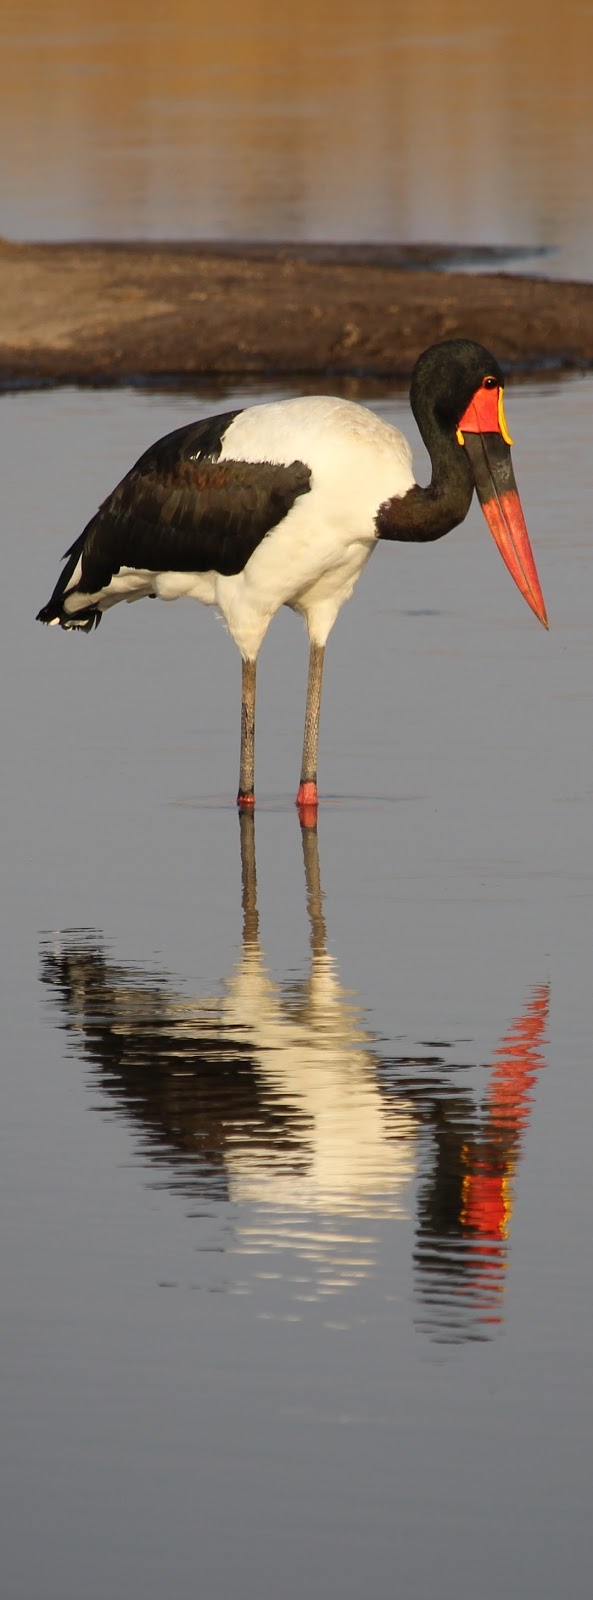 A photo of a saddle billed stork.